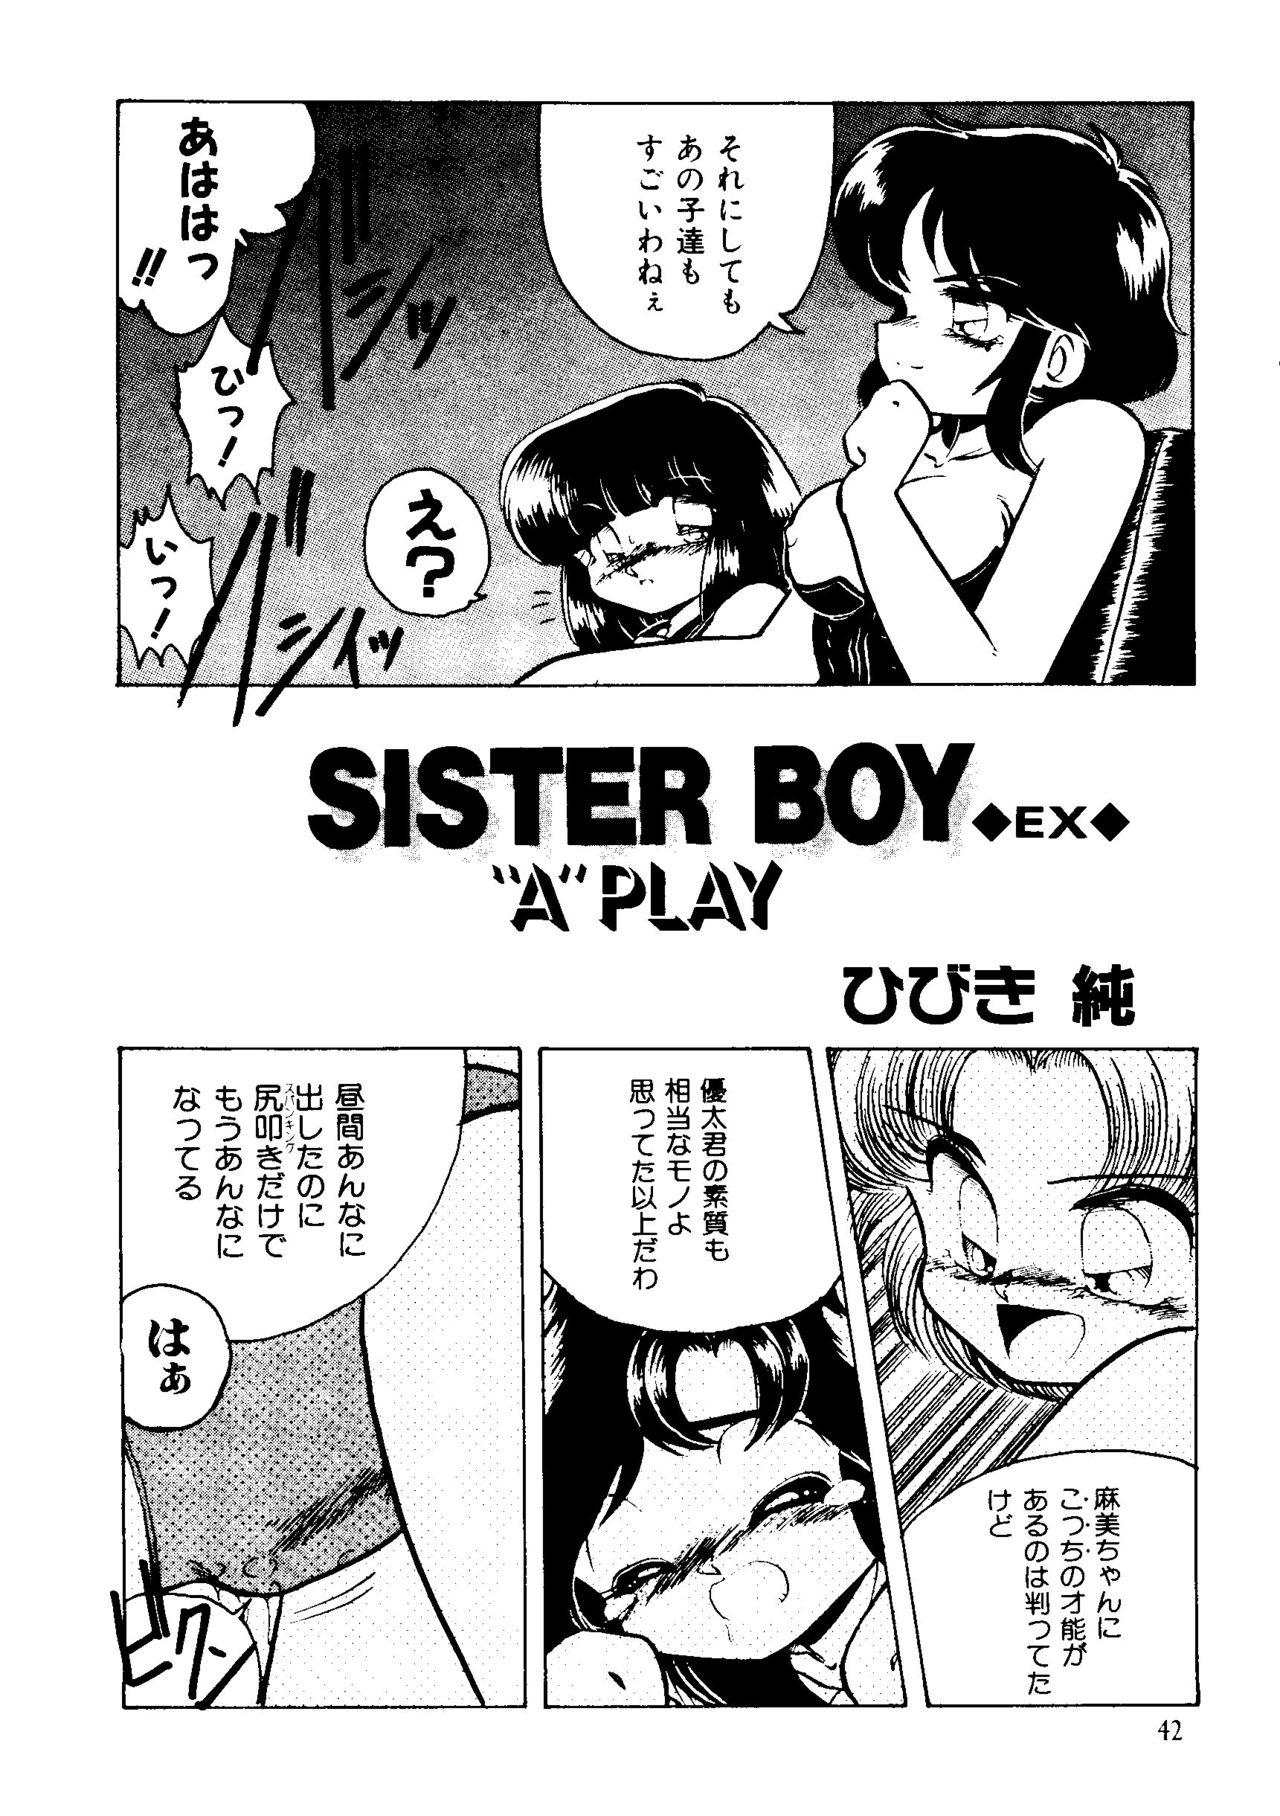 Sister Boy EX - "A" Play 1